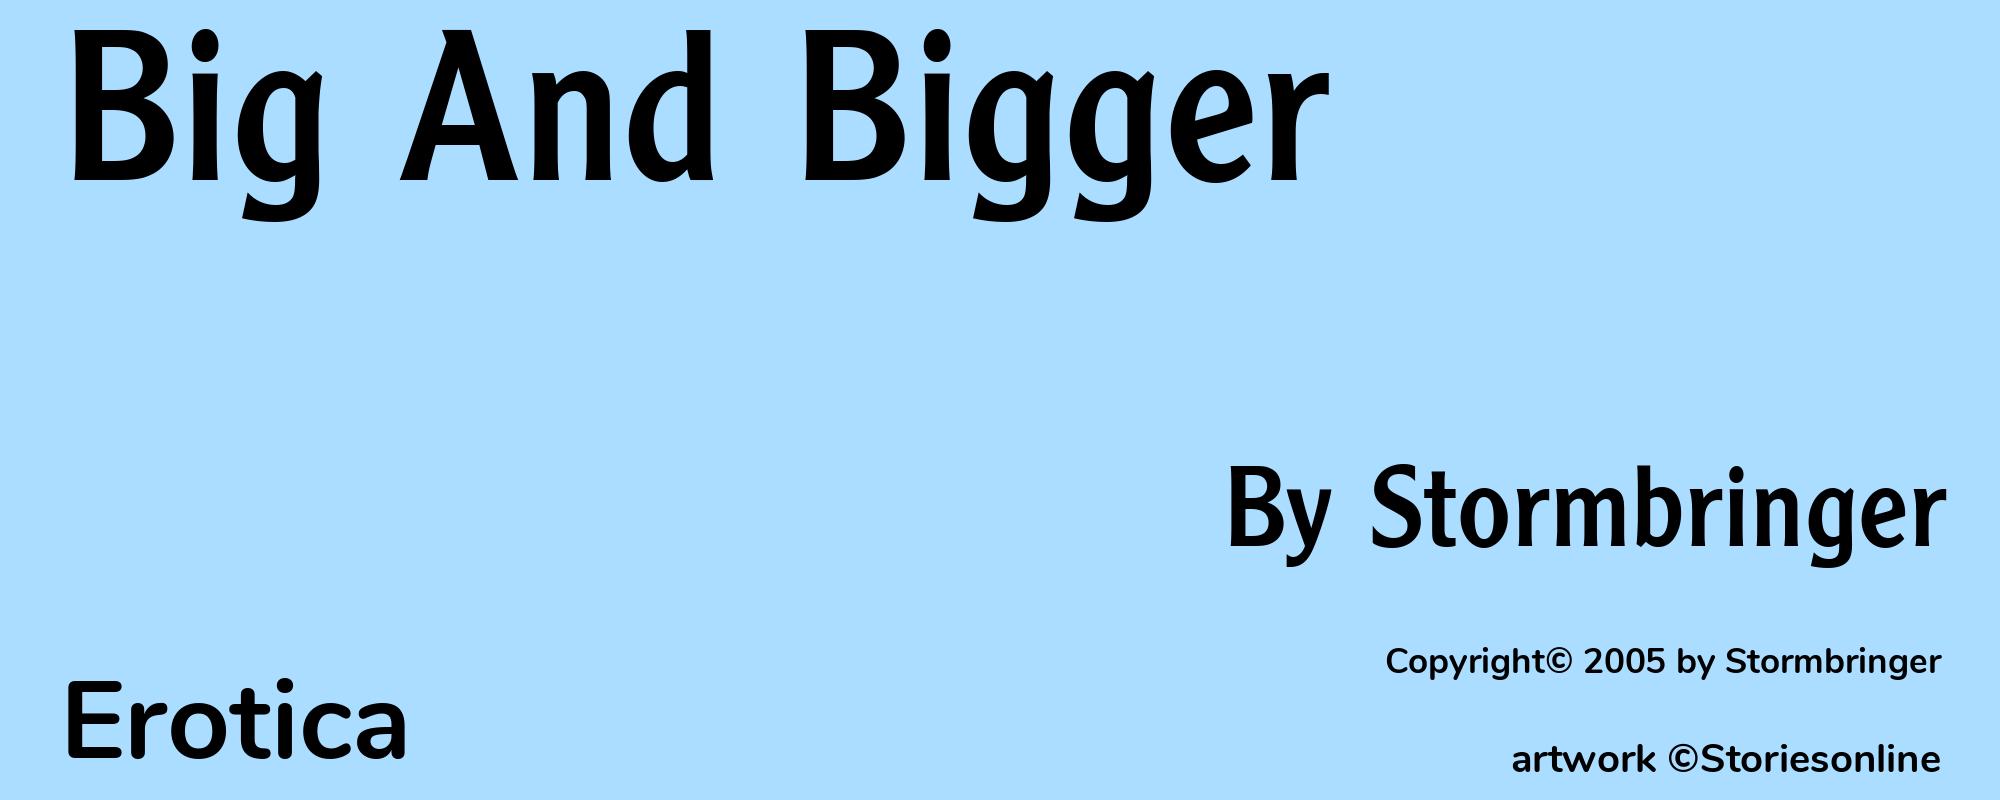 Big And Bigger - Cover